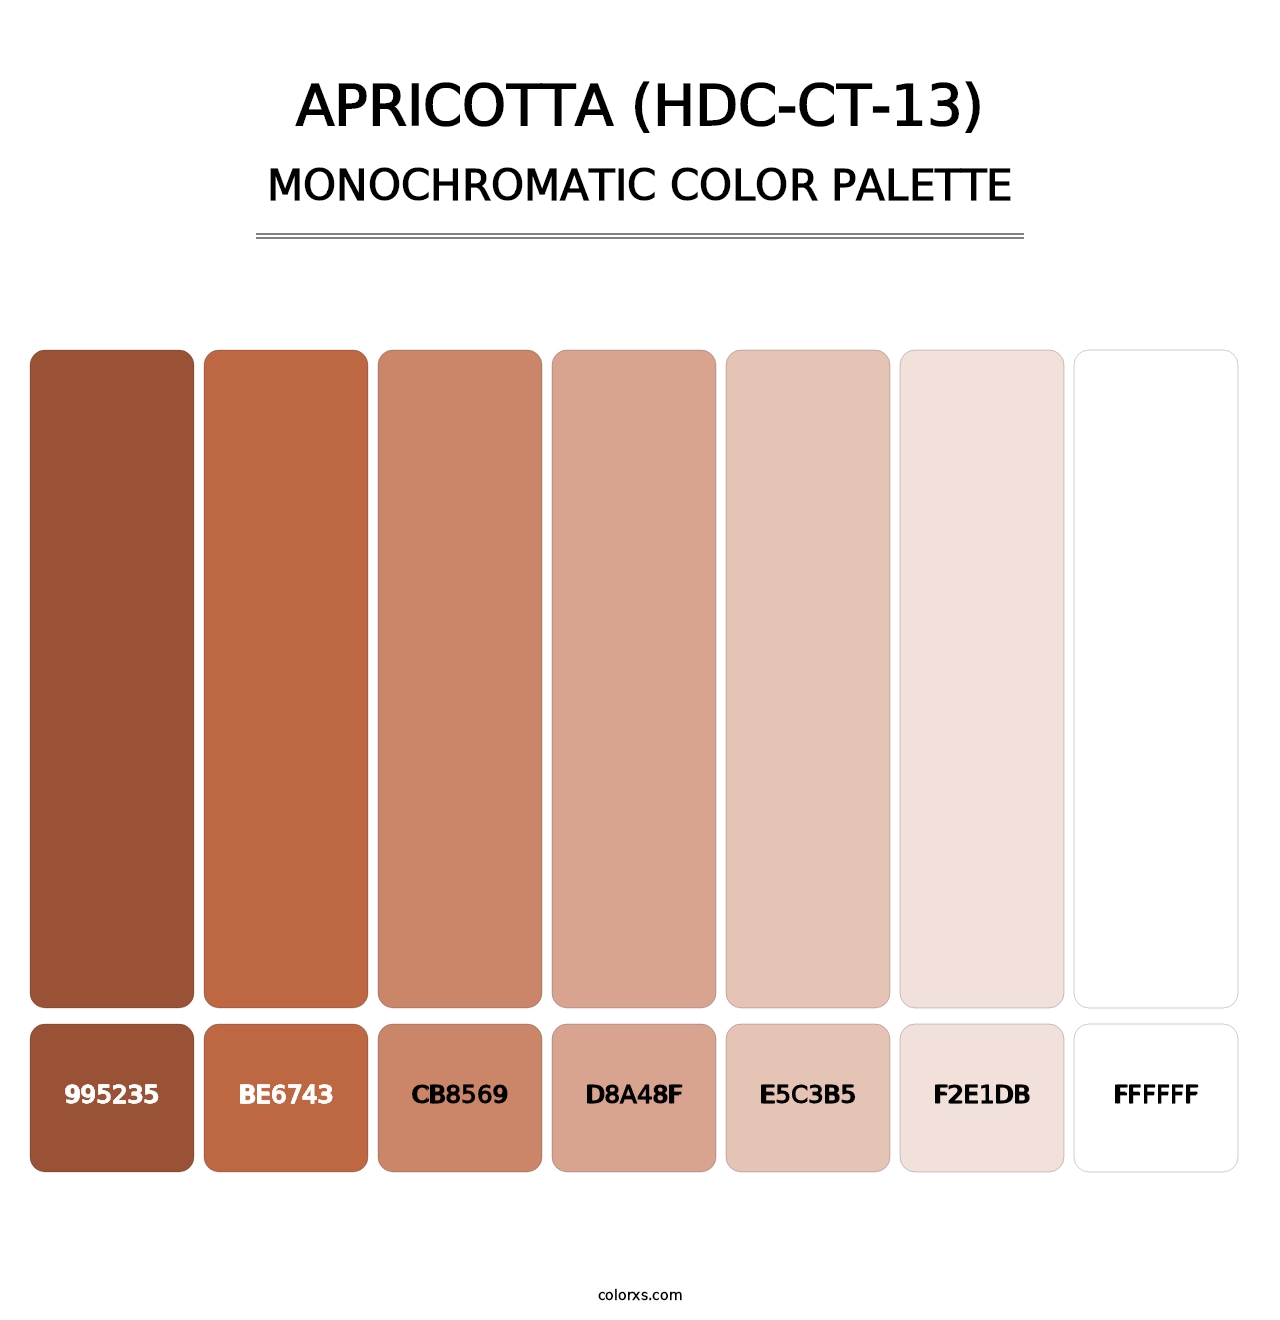 Apricotta (HDC-CT-13) - Monochromatic Color Palette